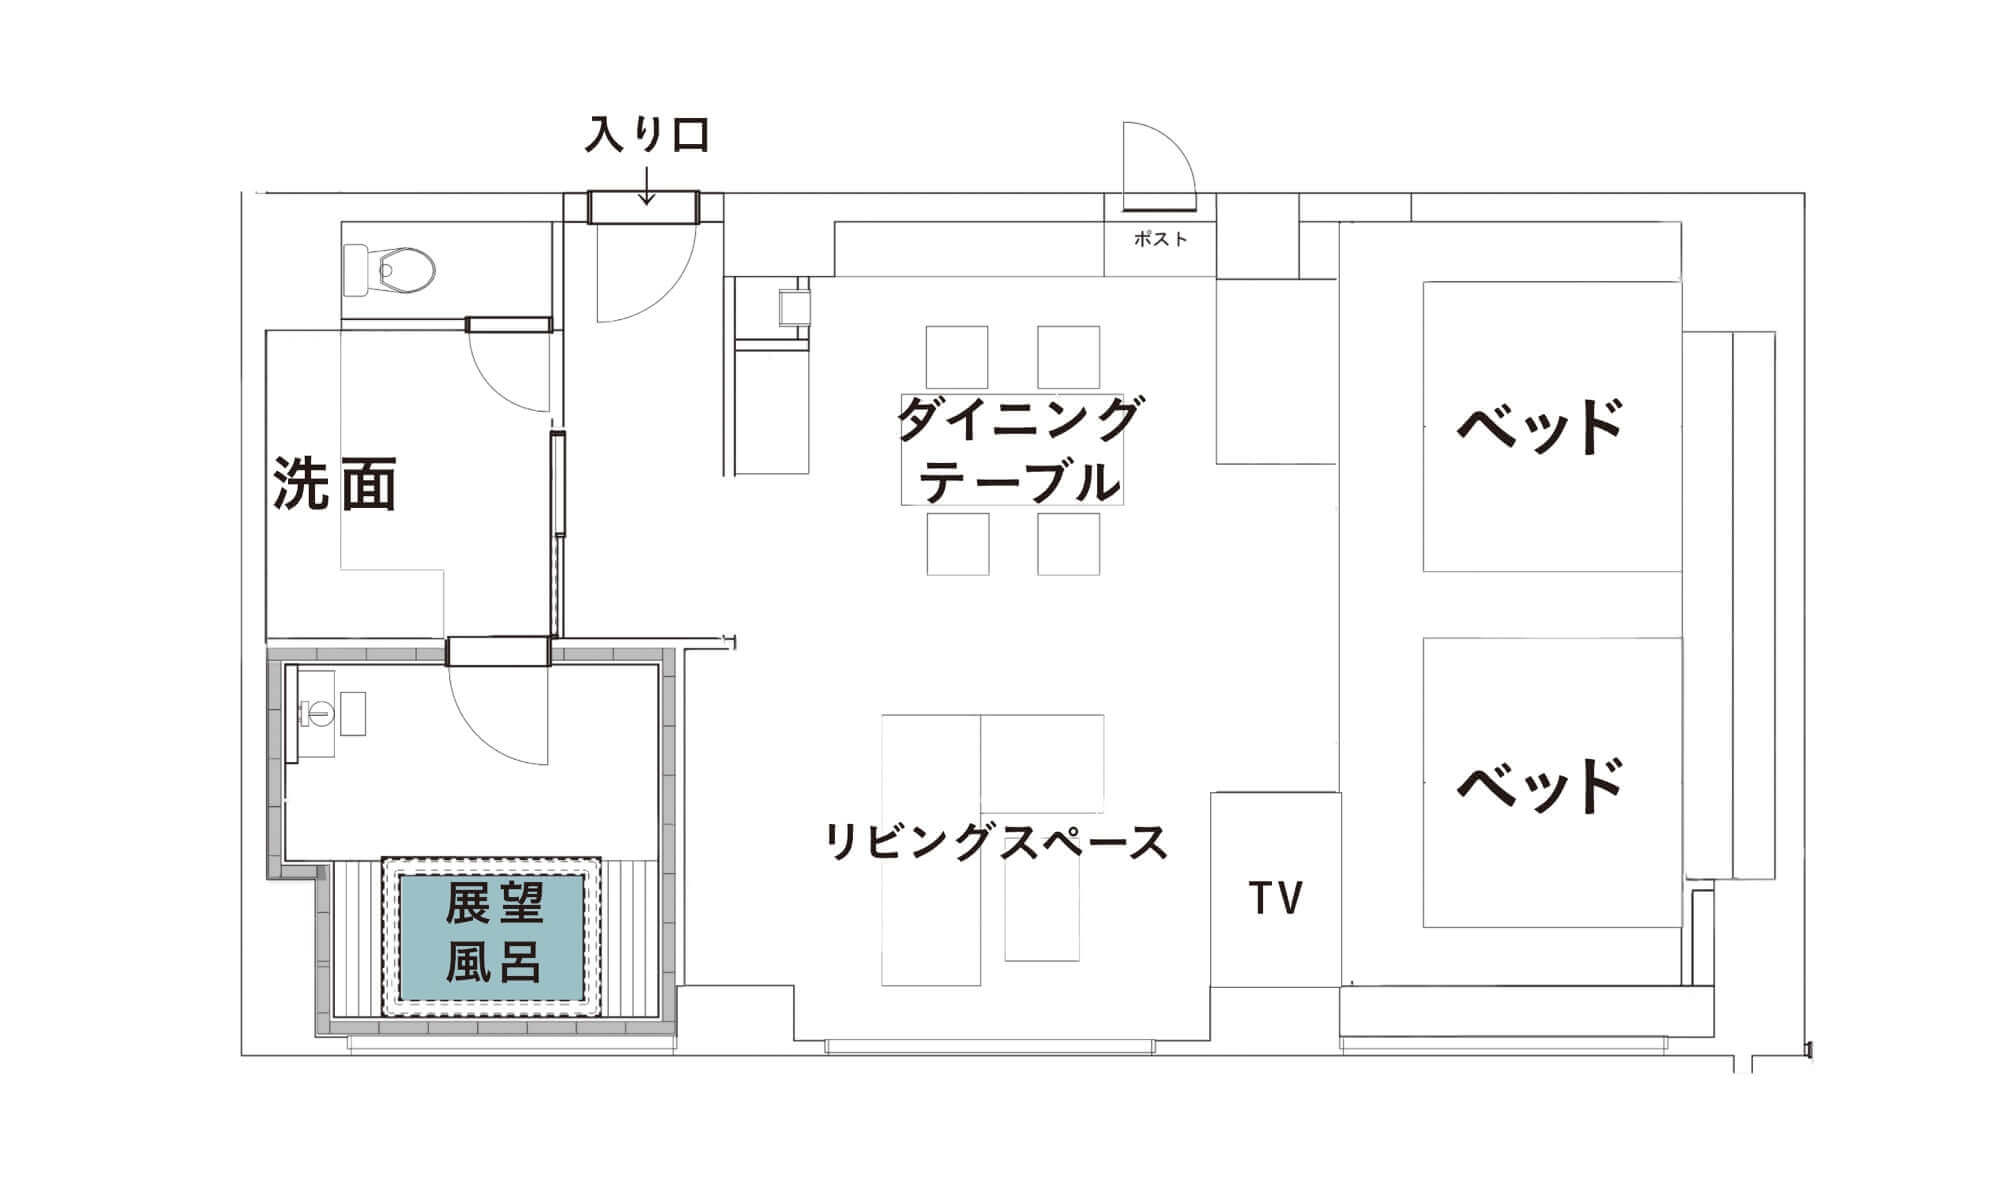 【スイート】展望風呂付客室「秋風楽」303号室 平面図